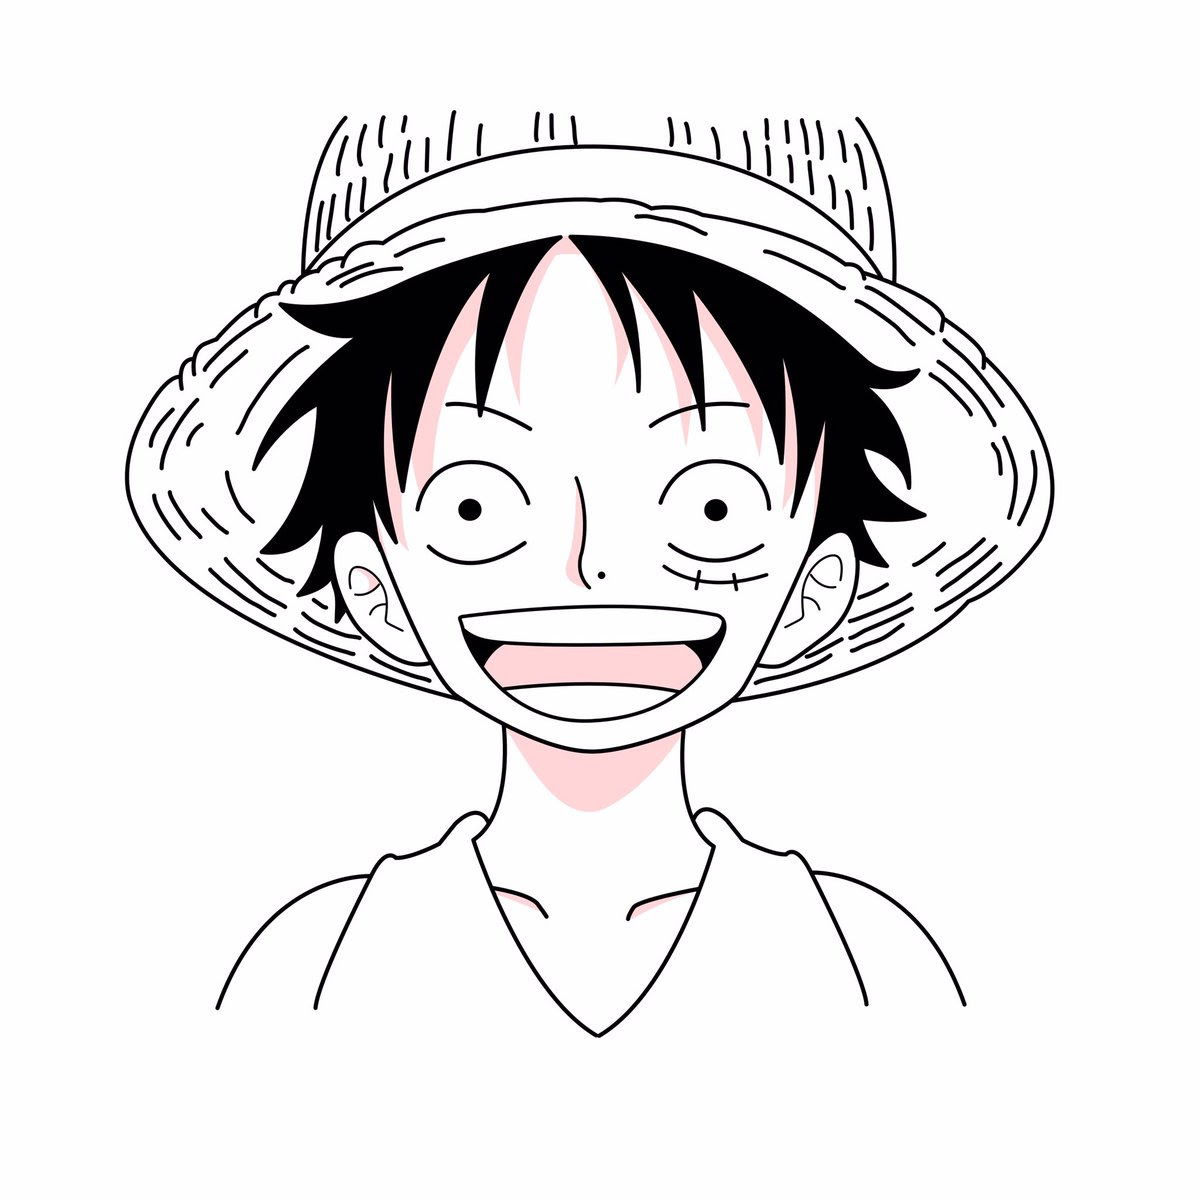 Gambar Sketsa Anime One Piece - Contoh Sketsa Gambar